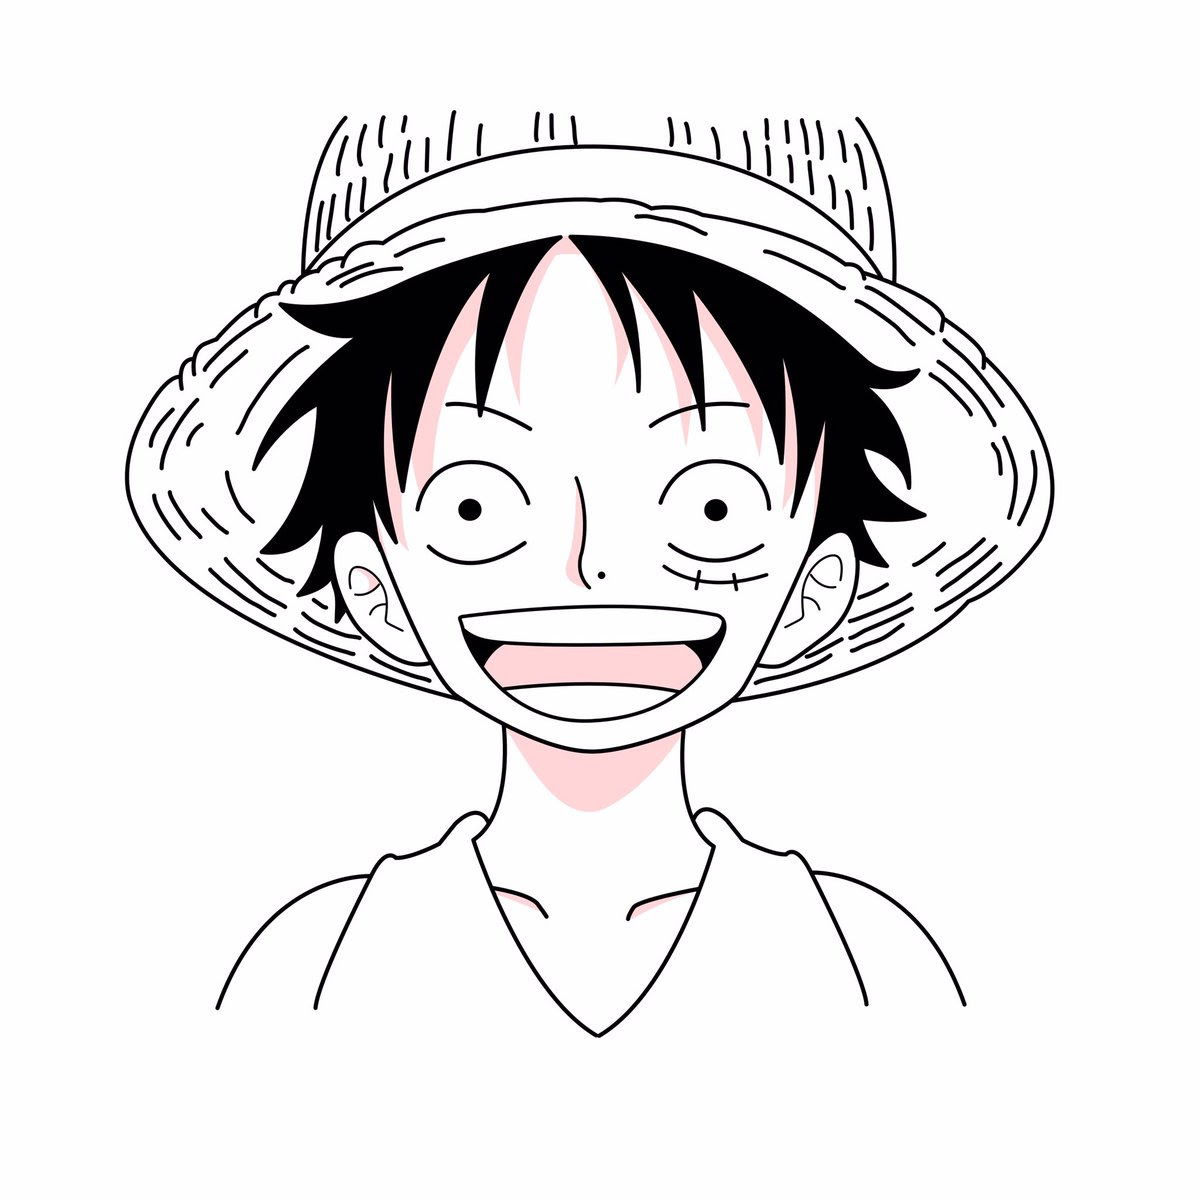 Gambar Sketsa Anime One Piece - Contoh Sketsa Gambar